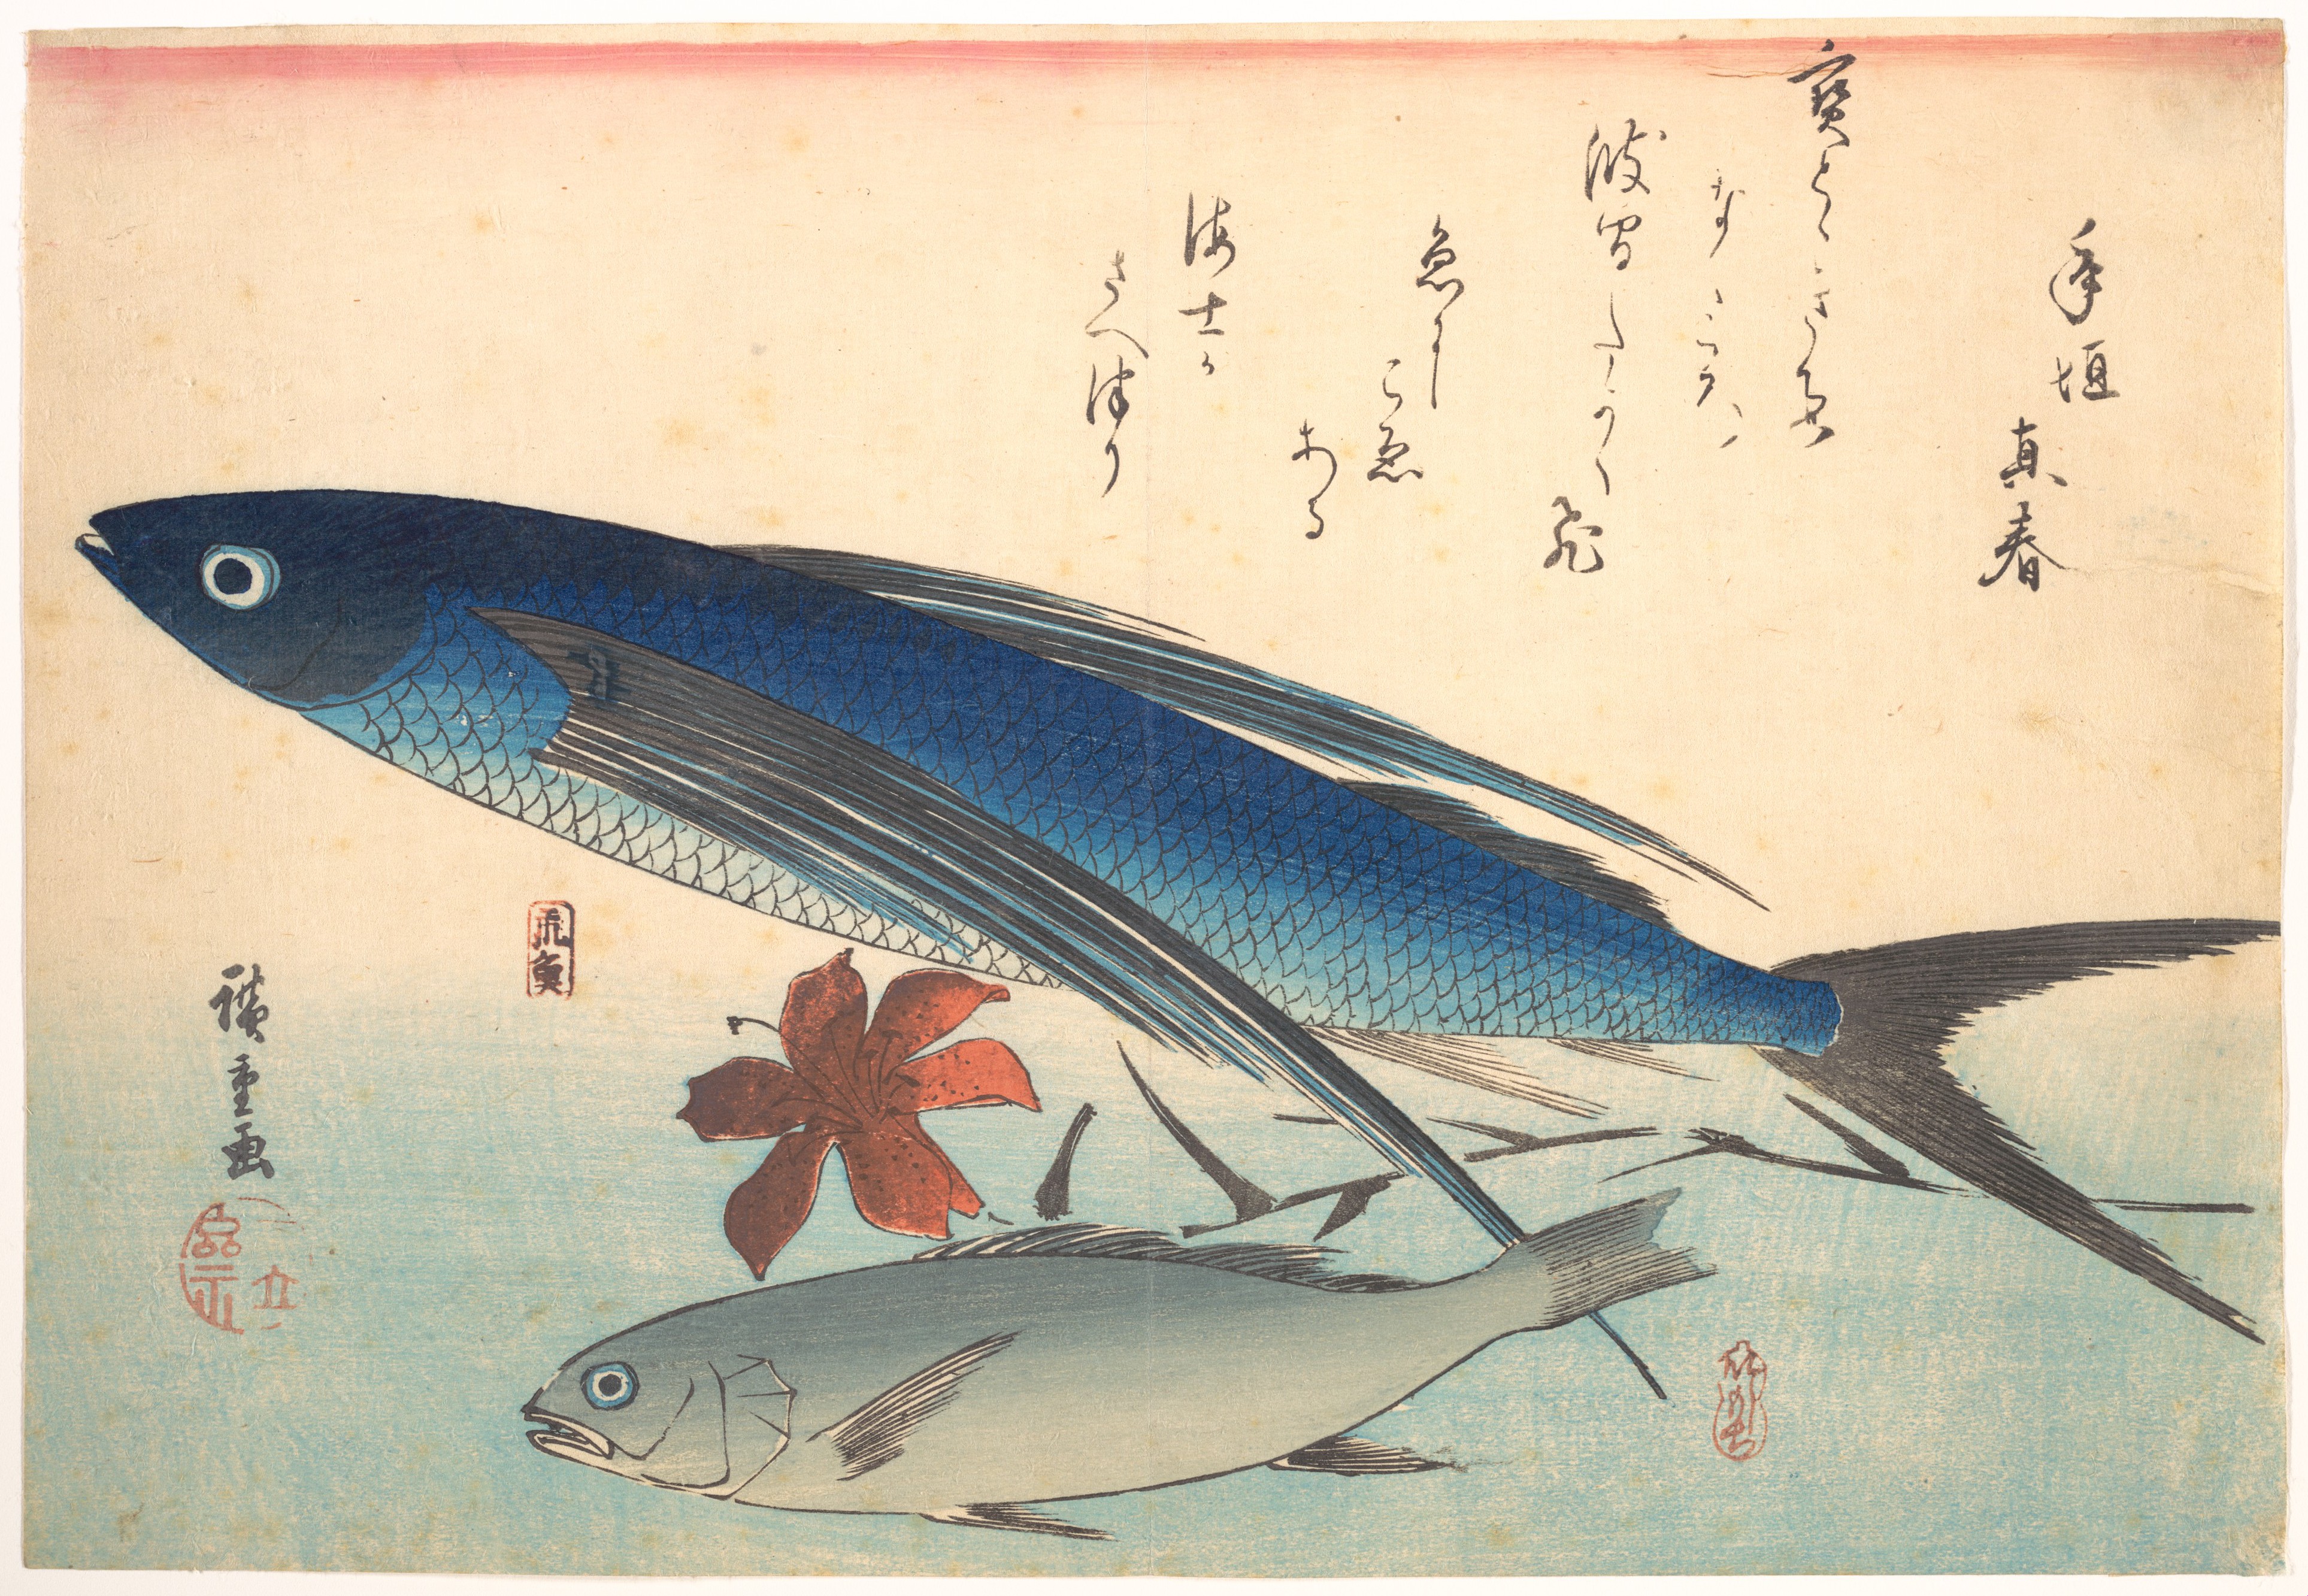 Utagawa Hiroshige | Tobiuo and Ishimochi Fish, from the series 